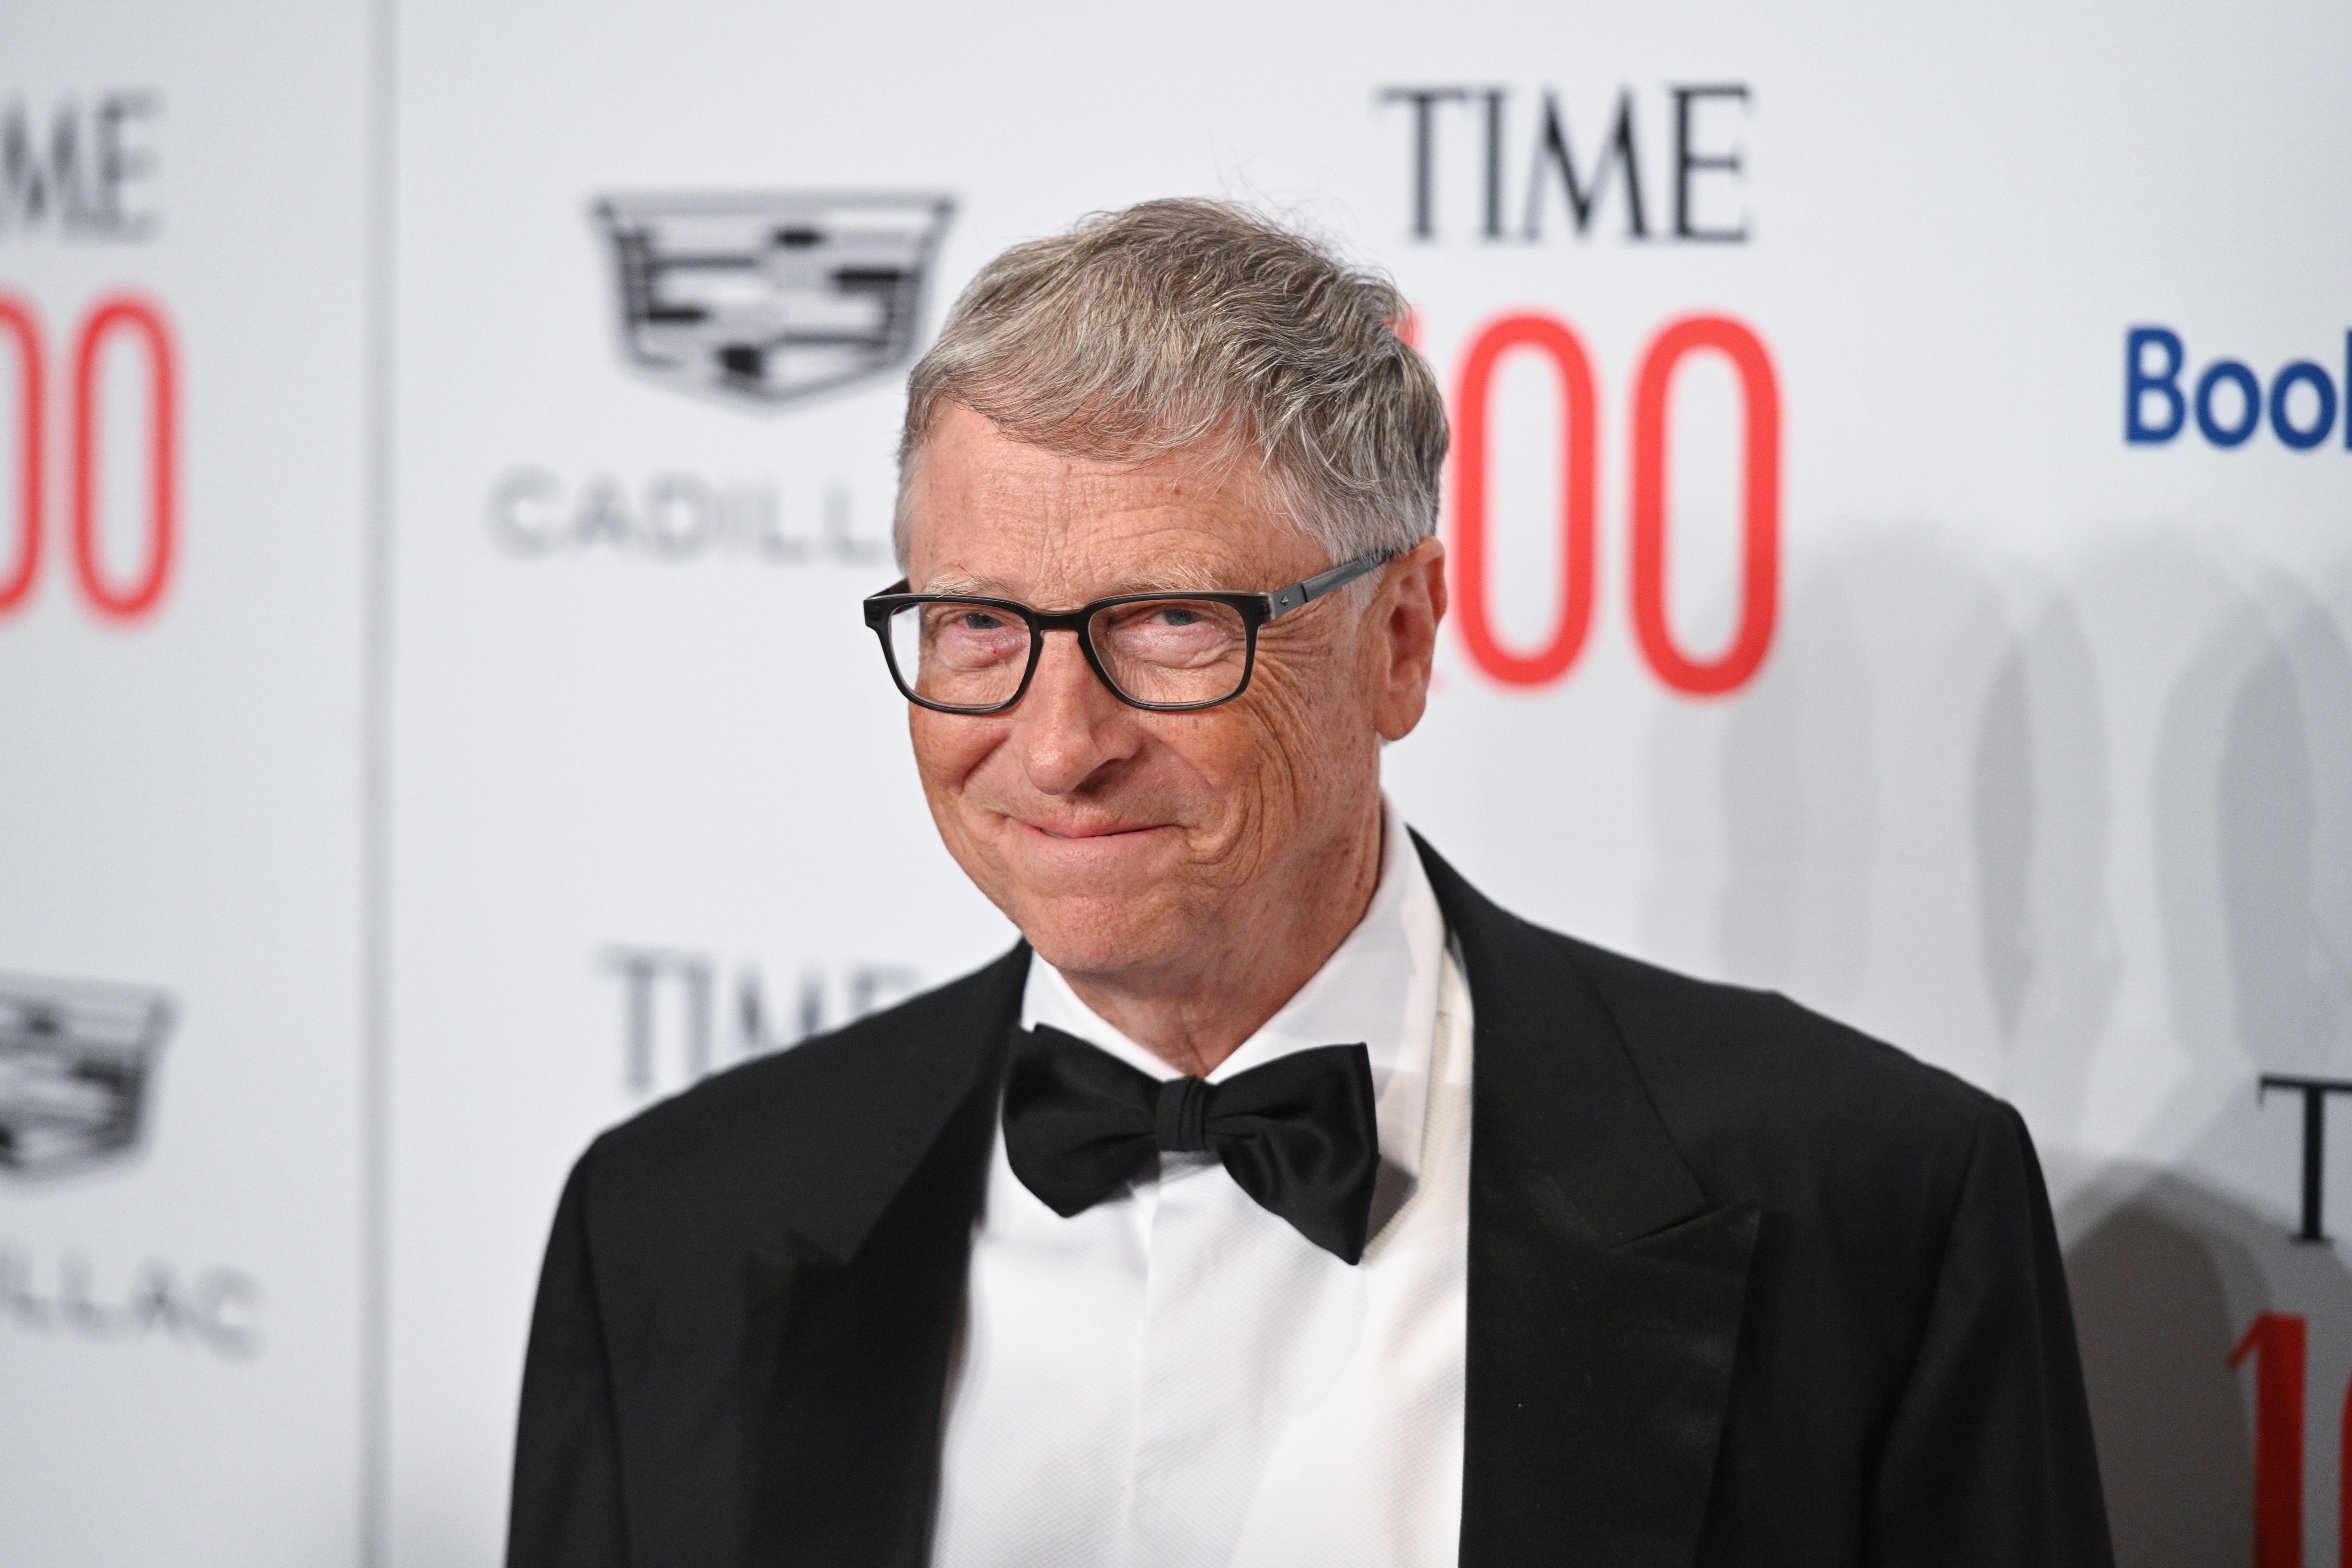 Bill Gates at TIME100 Gala 2022